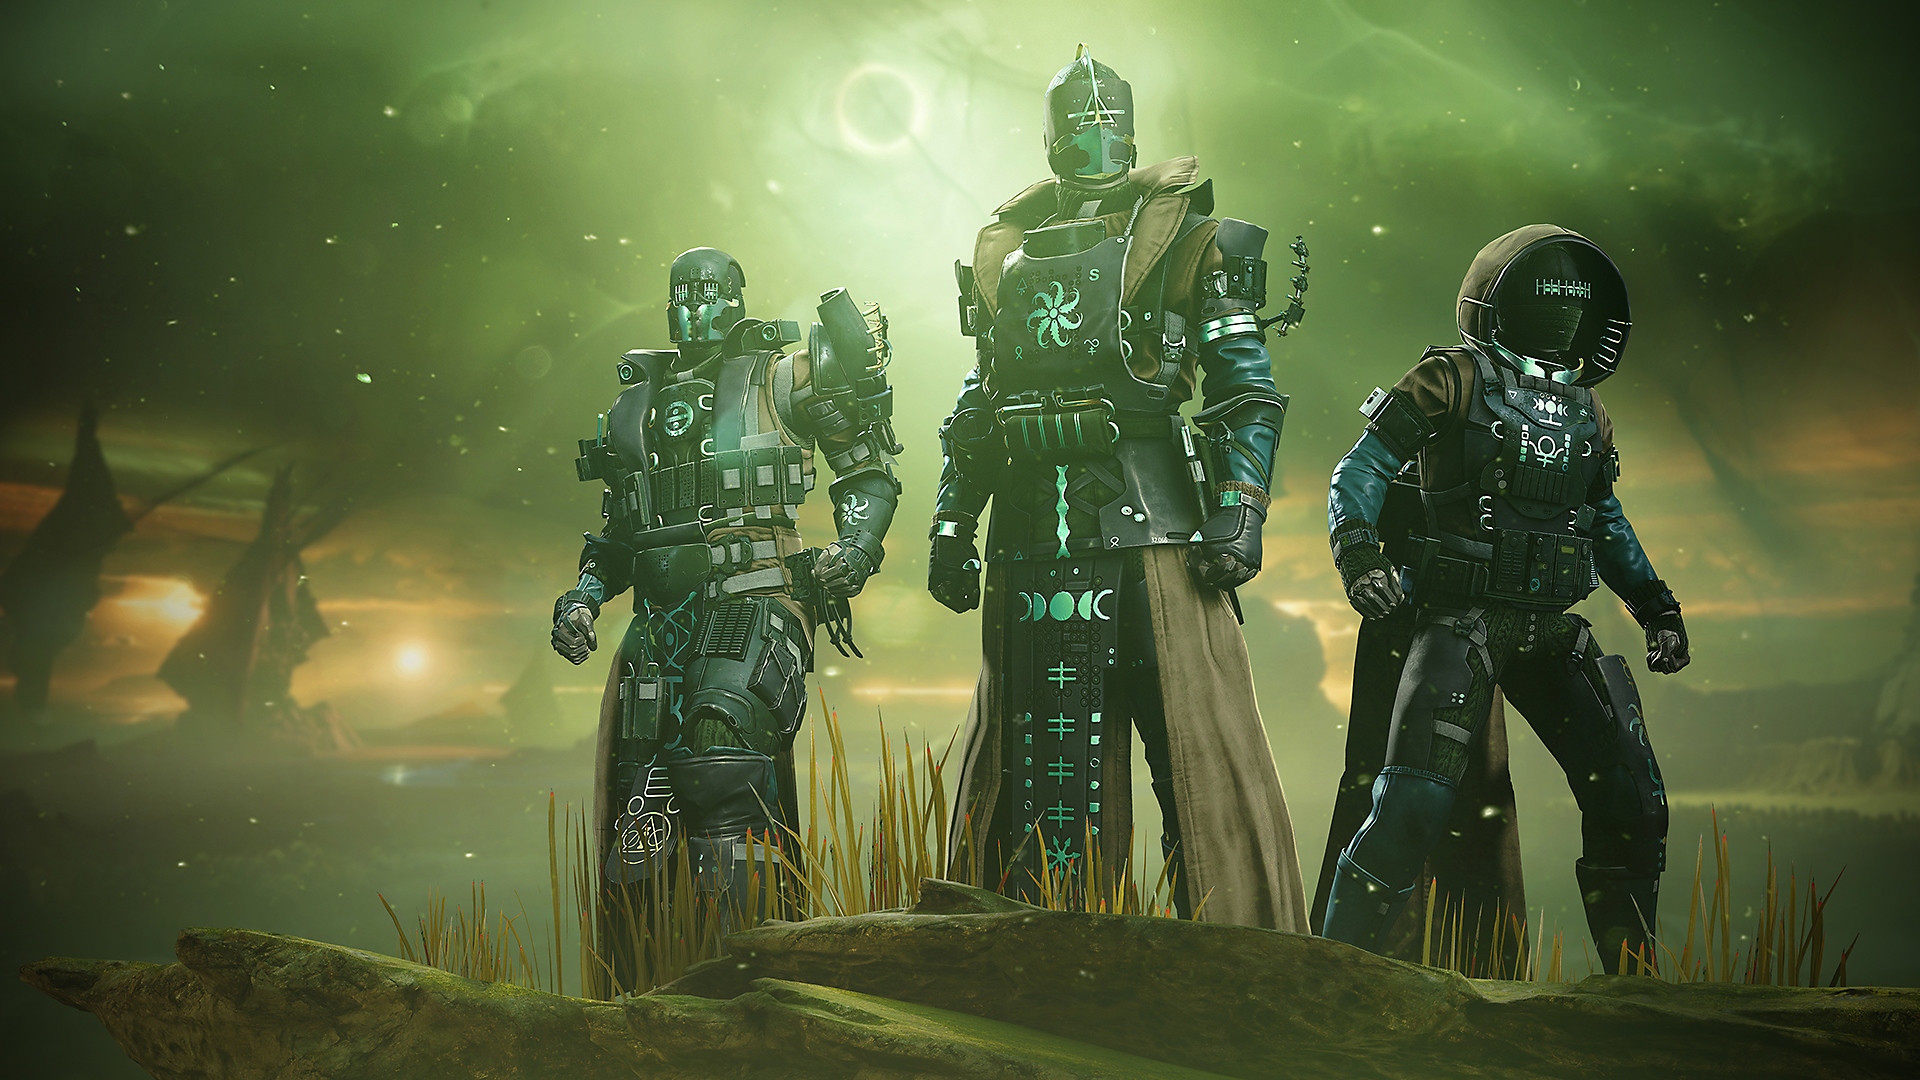 Destiny 2 – снимок экрана, на котором Стражи стоят вместе